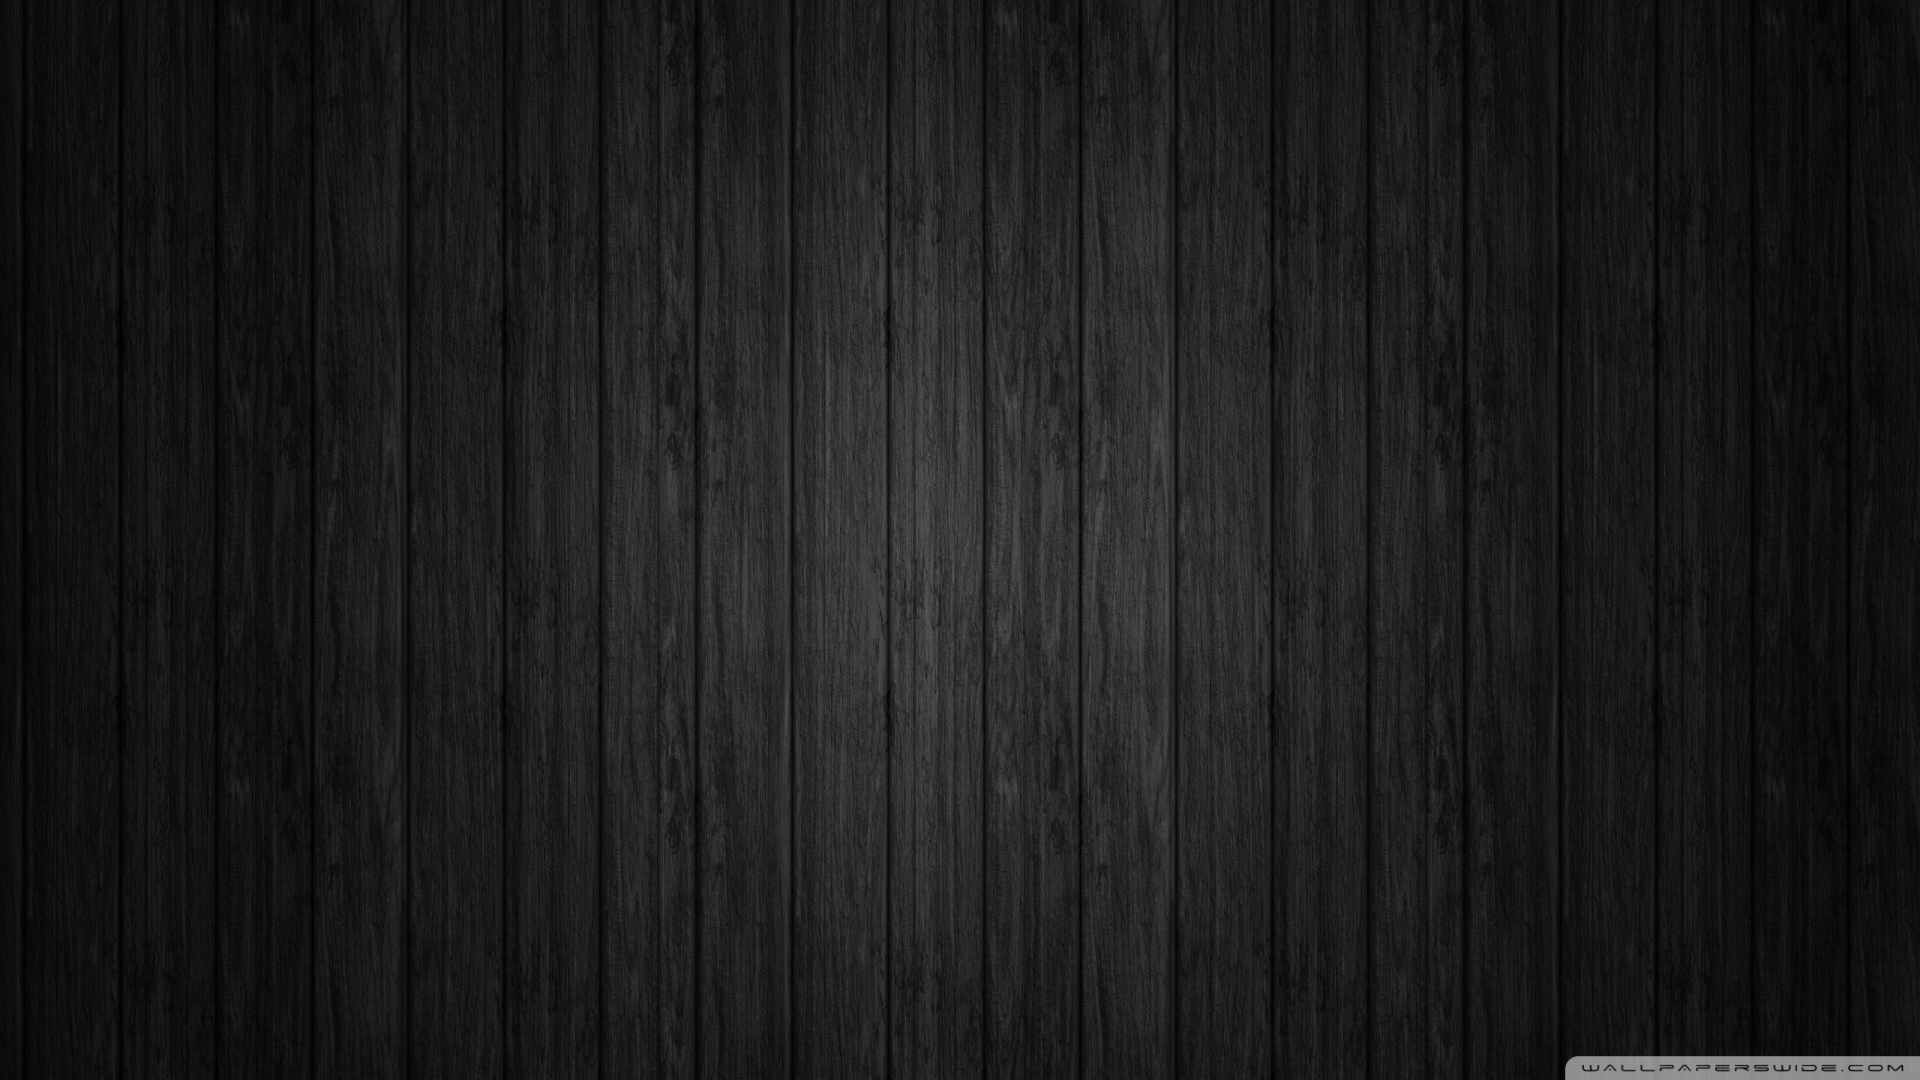 Background Wood Black Ground Back Wallpaper Image